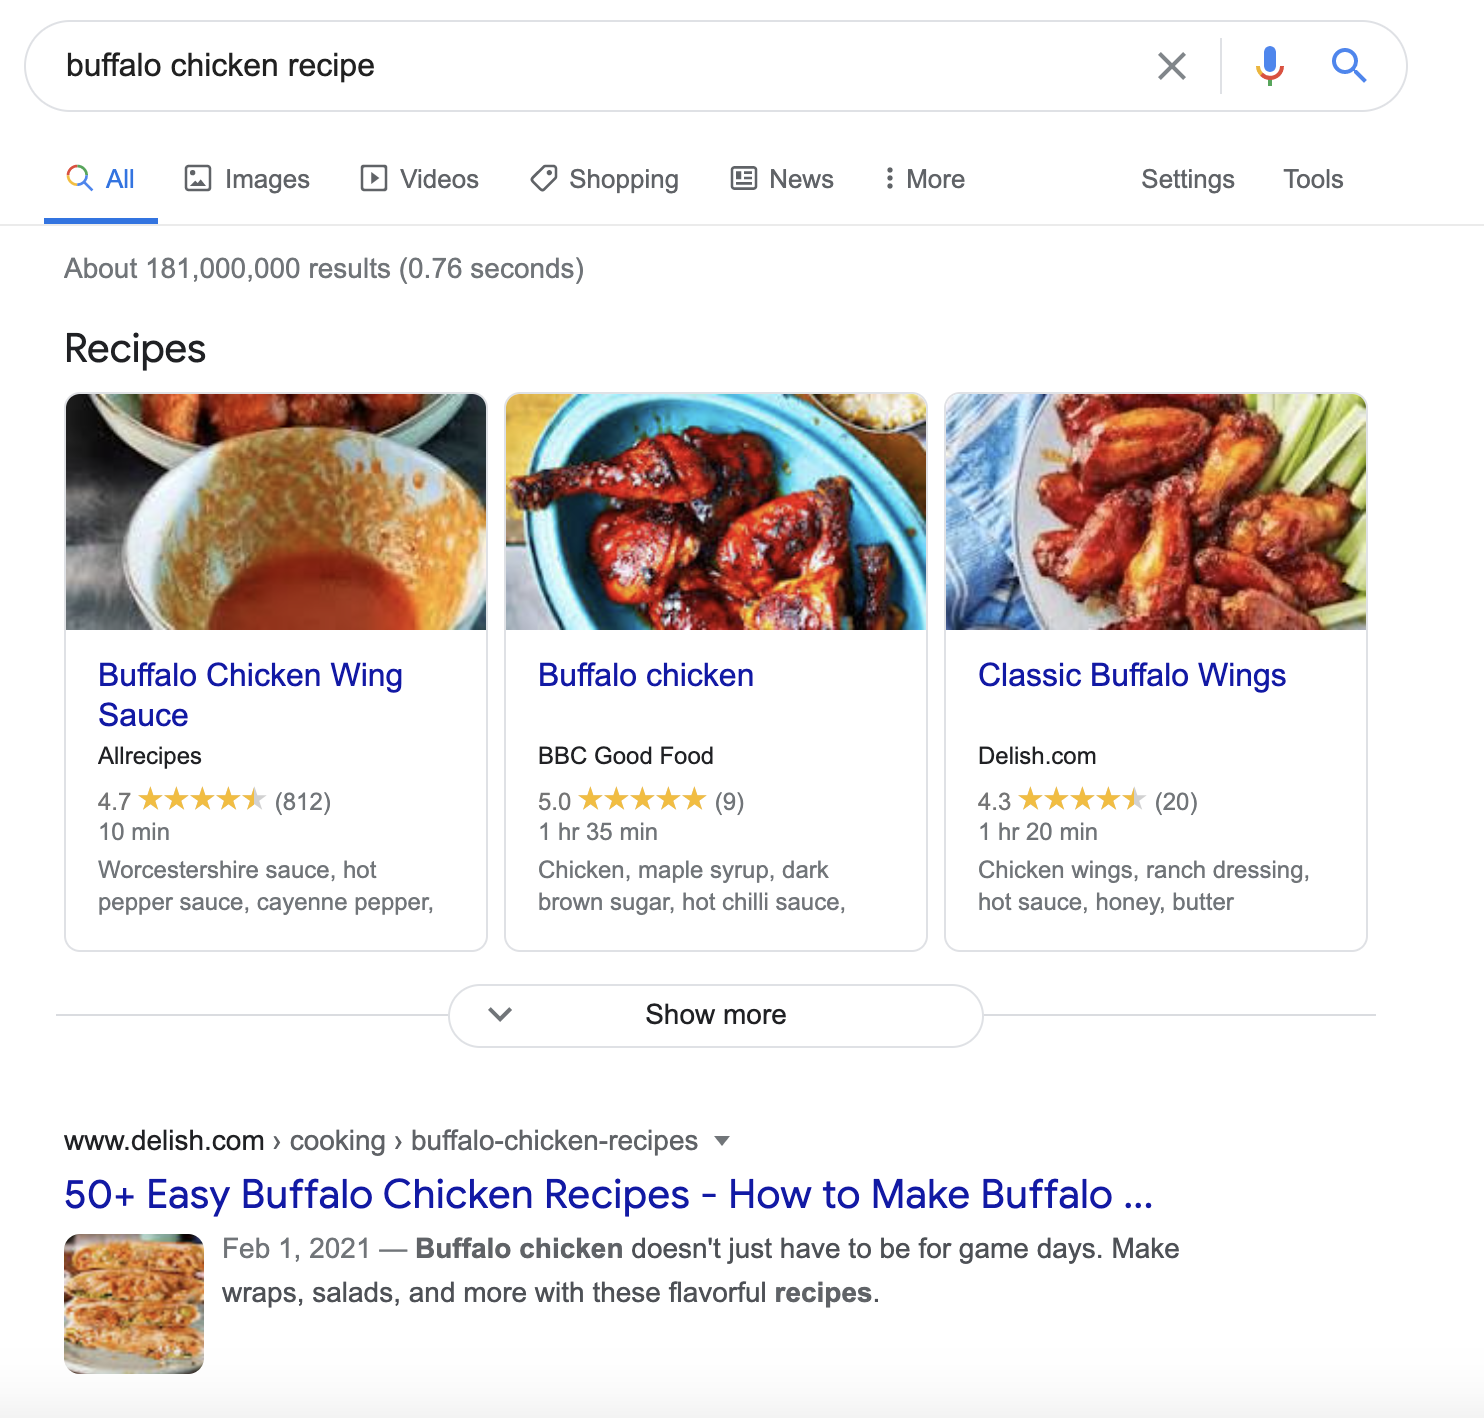 buffalo chicken recipe structured data